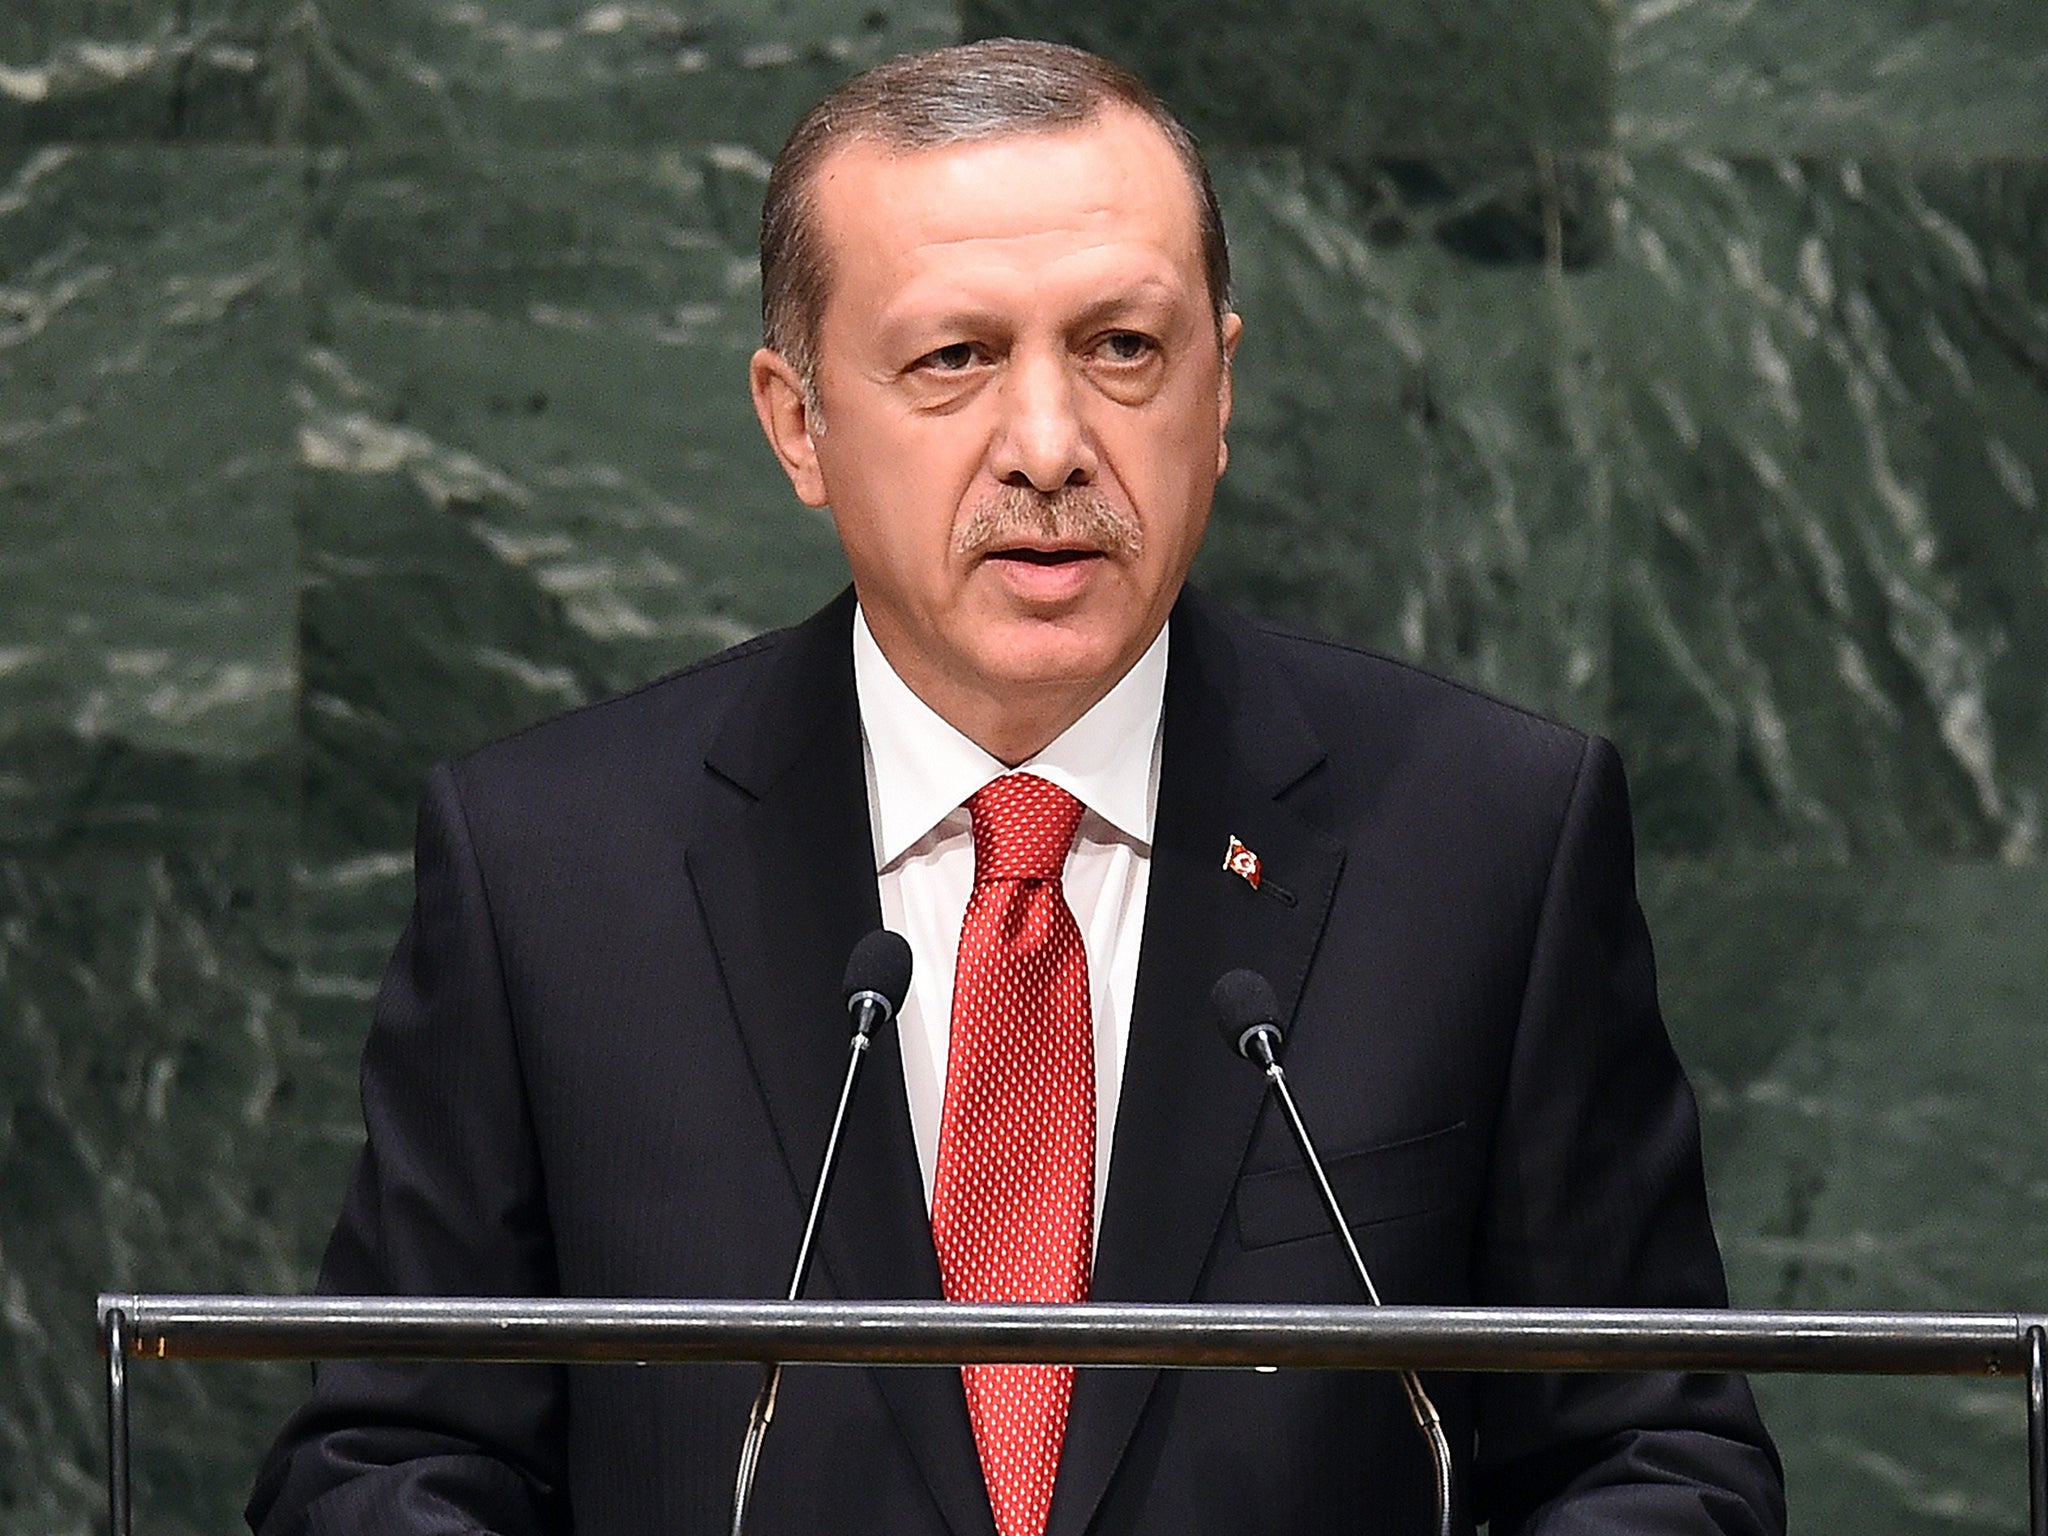 Increasingly authoritarian: Turkey president, Recep Tayyep Erdogan